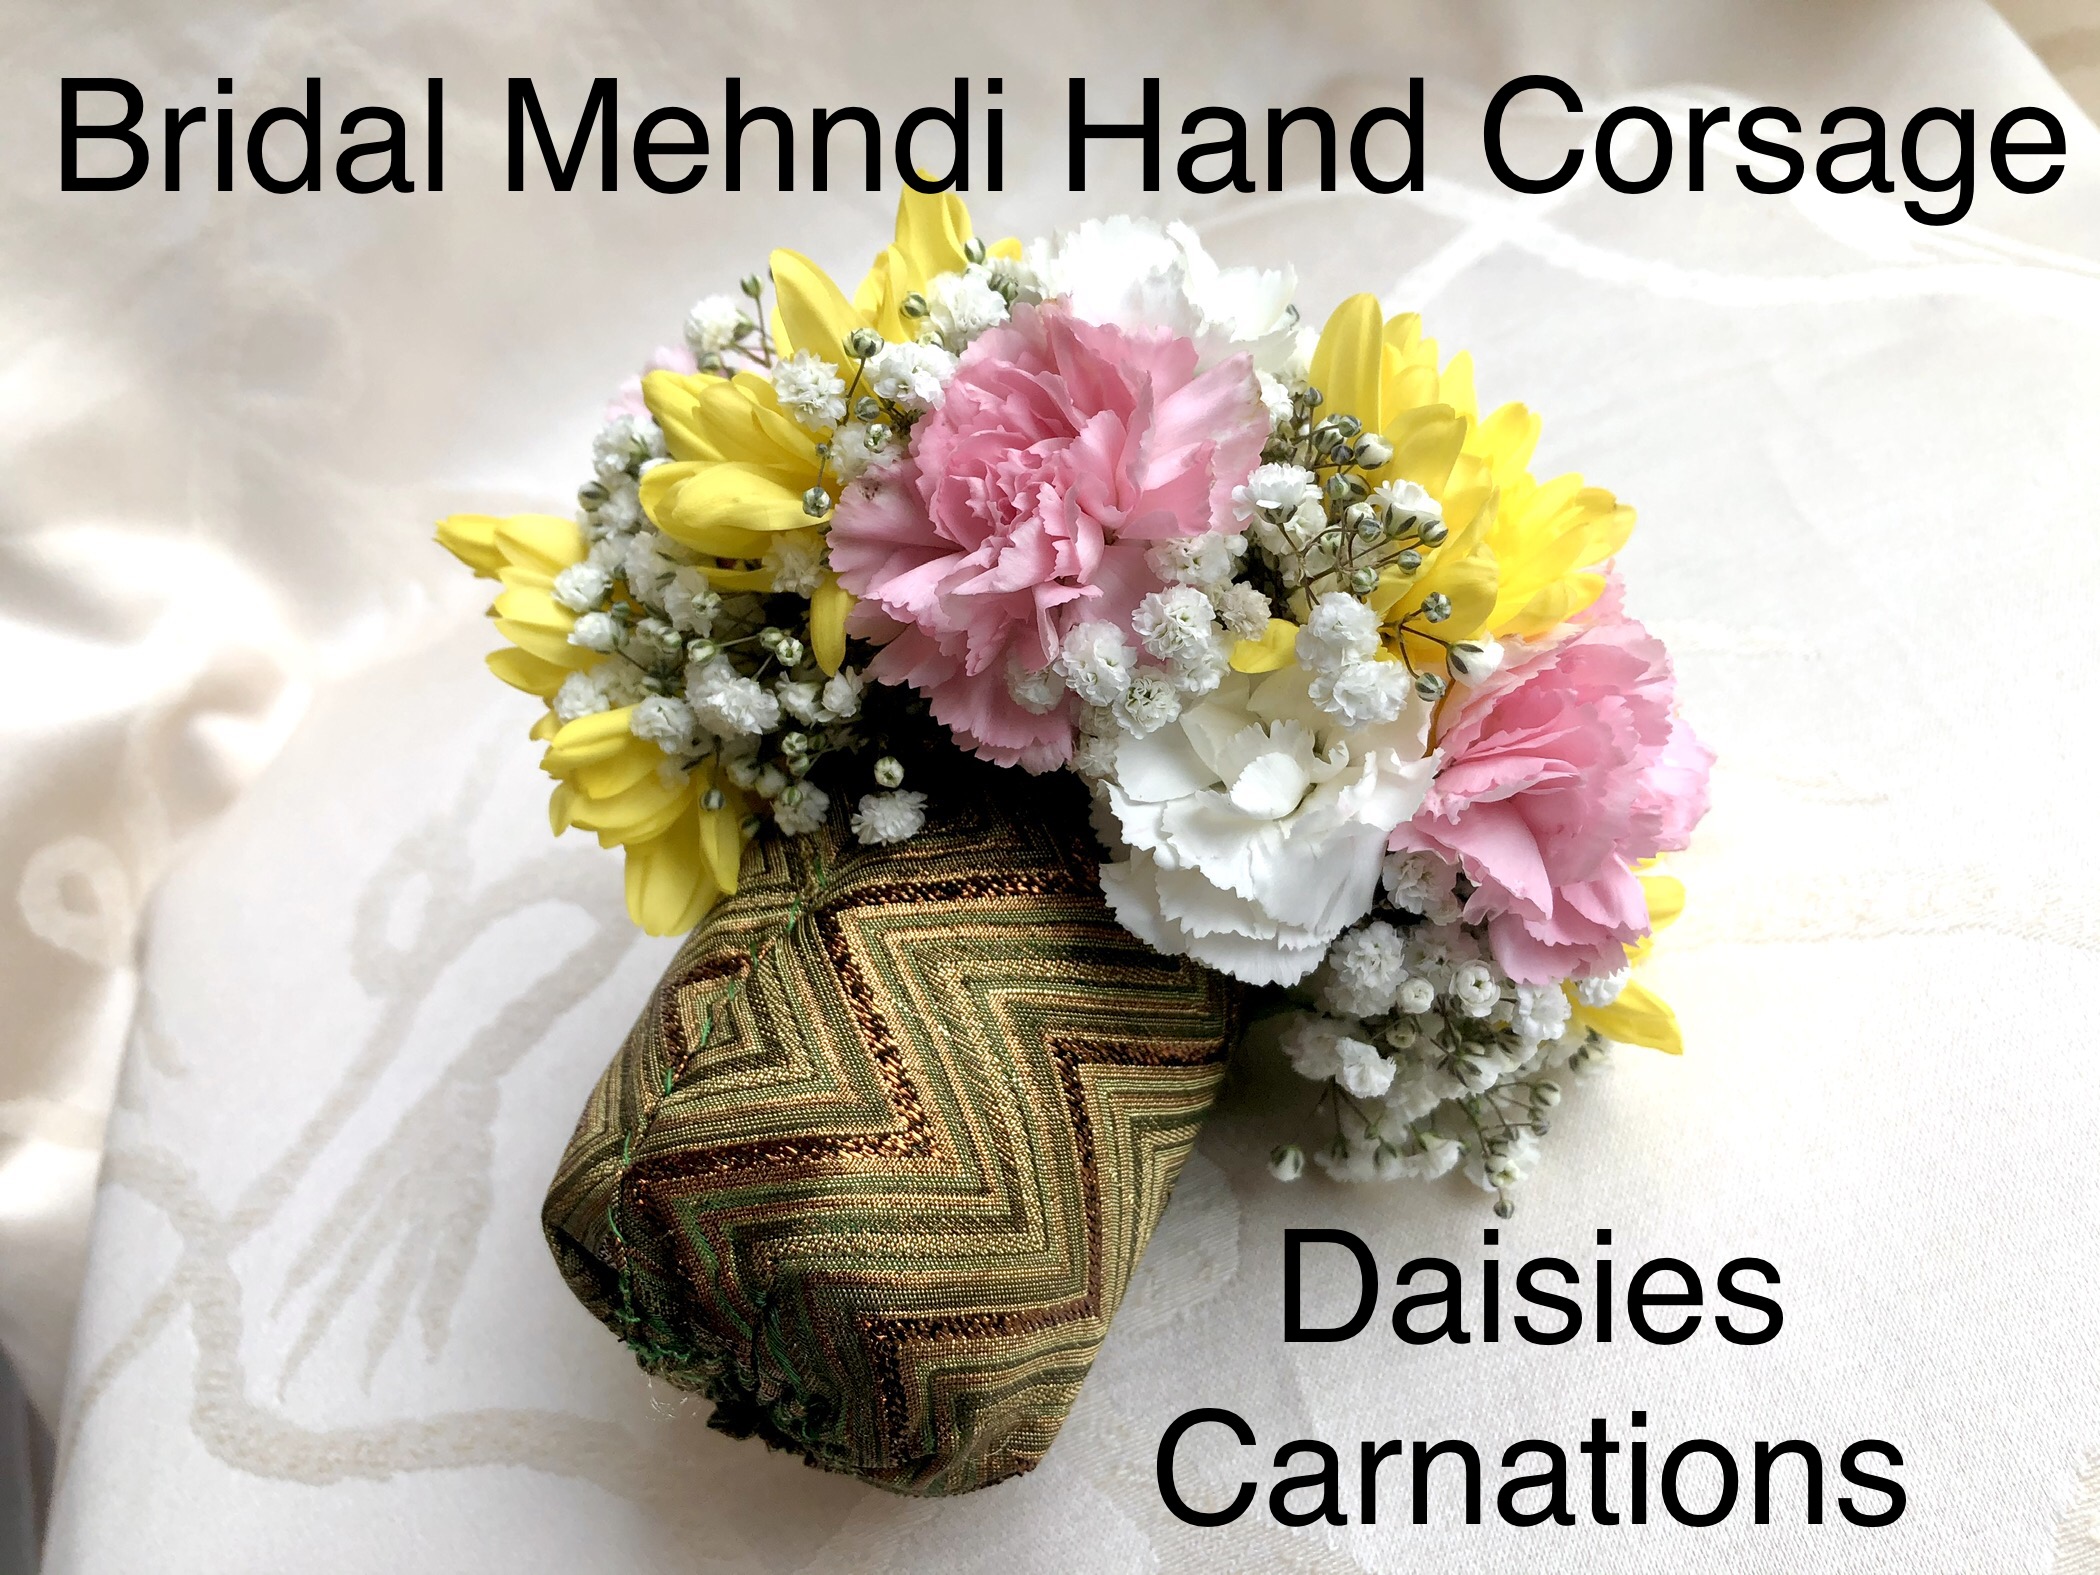 https://0901.nccdn.net/4_2/000/000/01e/20c/bridal-mehndi-hand-corsage-daisies-and-carnations.jpg